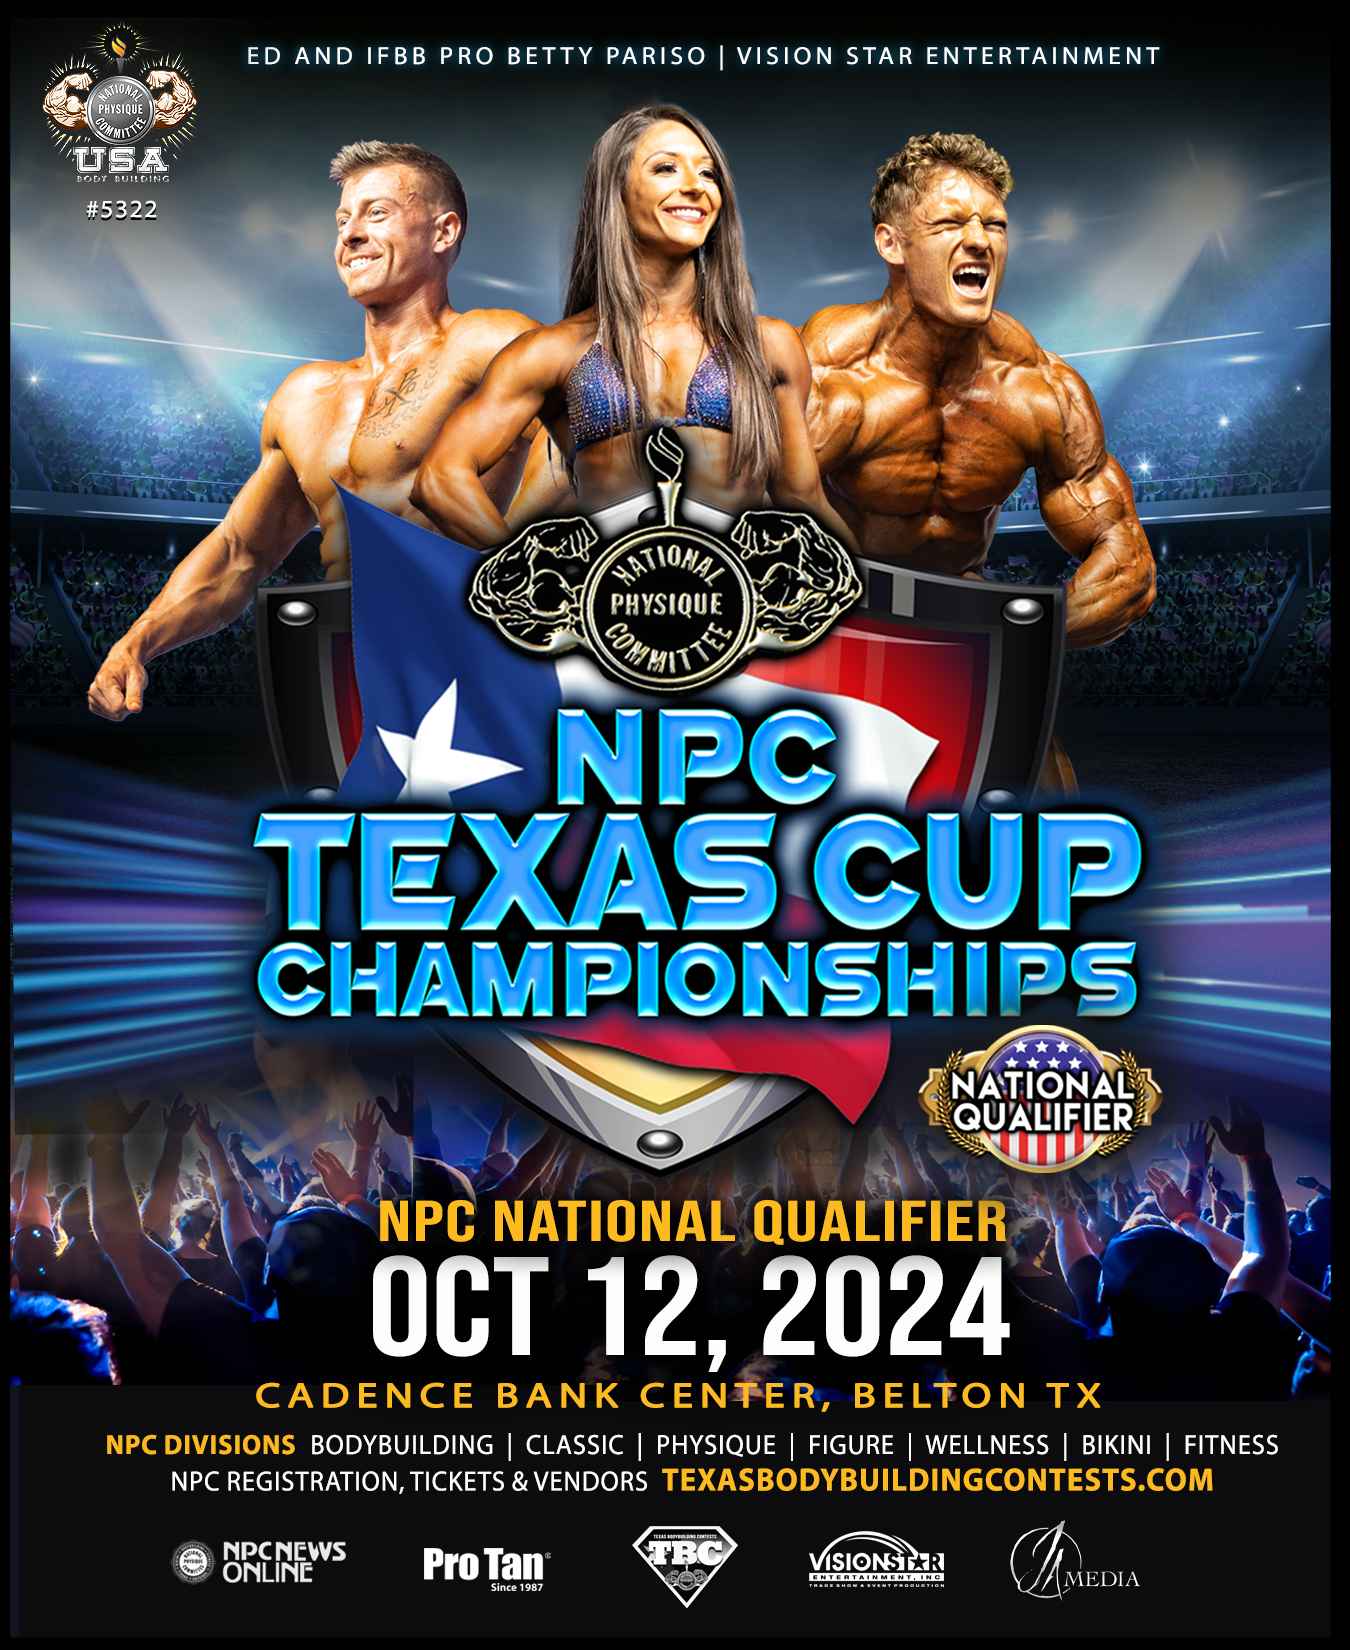 NPC Texas Cup Championships